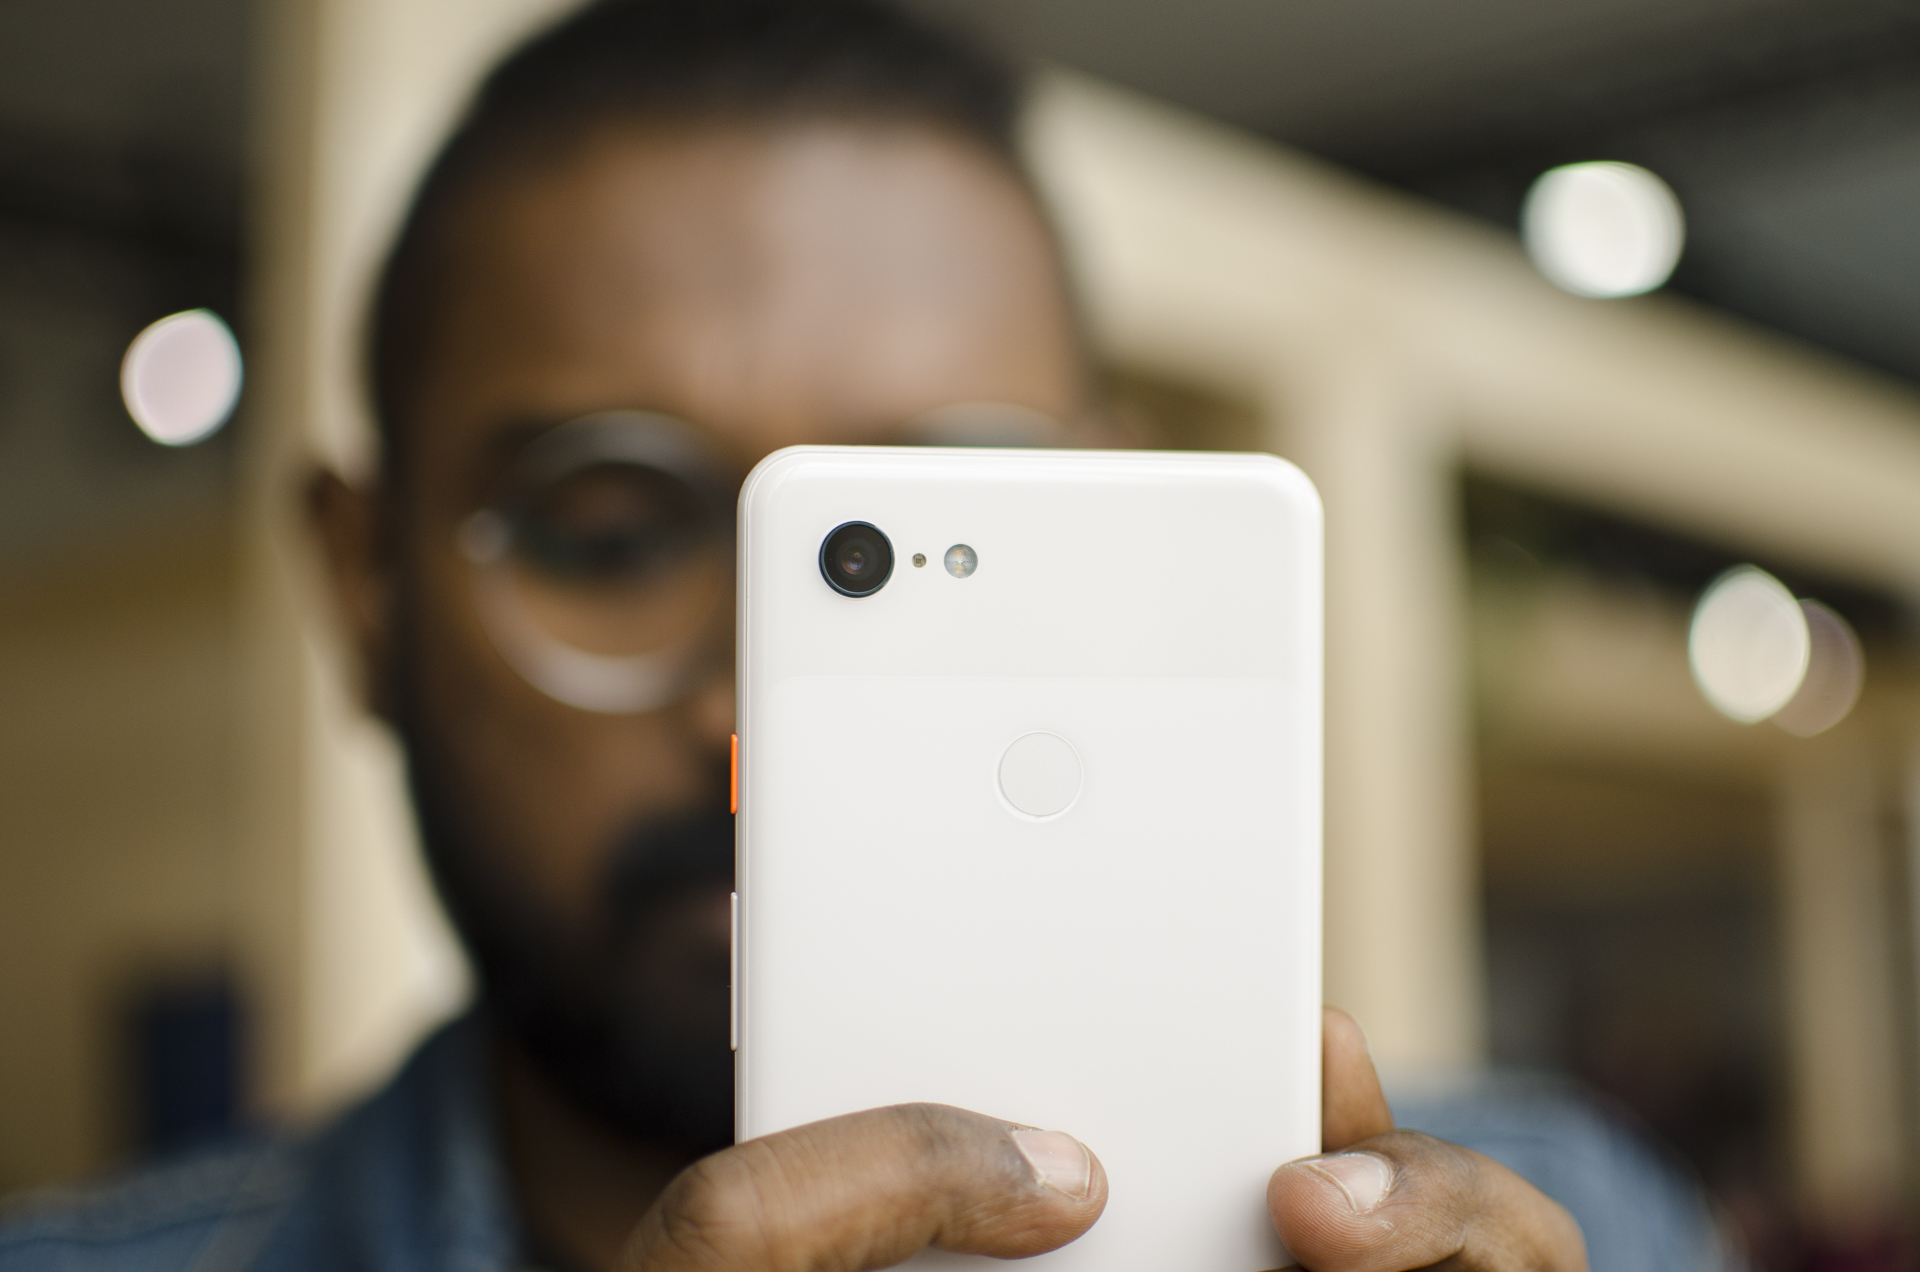 Google Pixel 3 XL - Mint Mobile